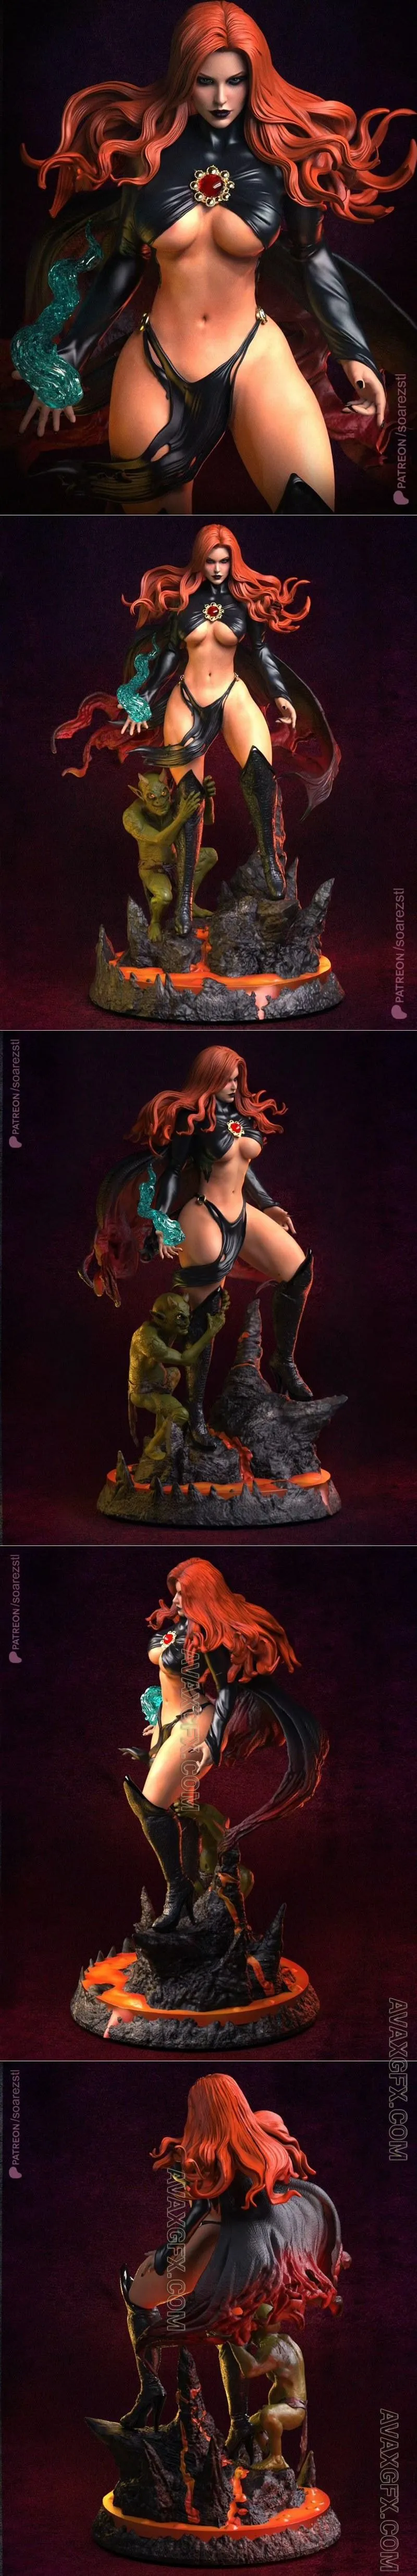 Soarez 3d - Goblin Queen - Madelyne Pryor - STL 3D Model